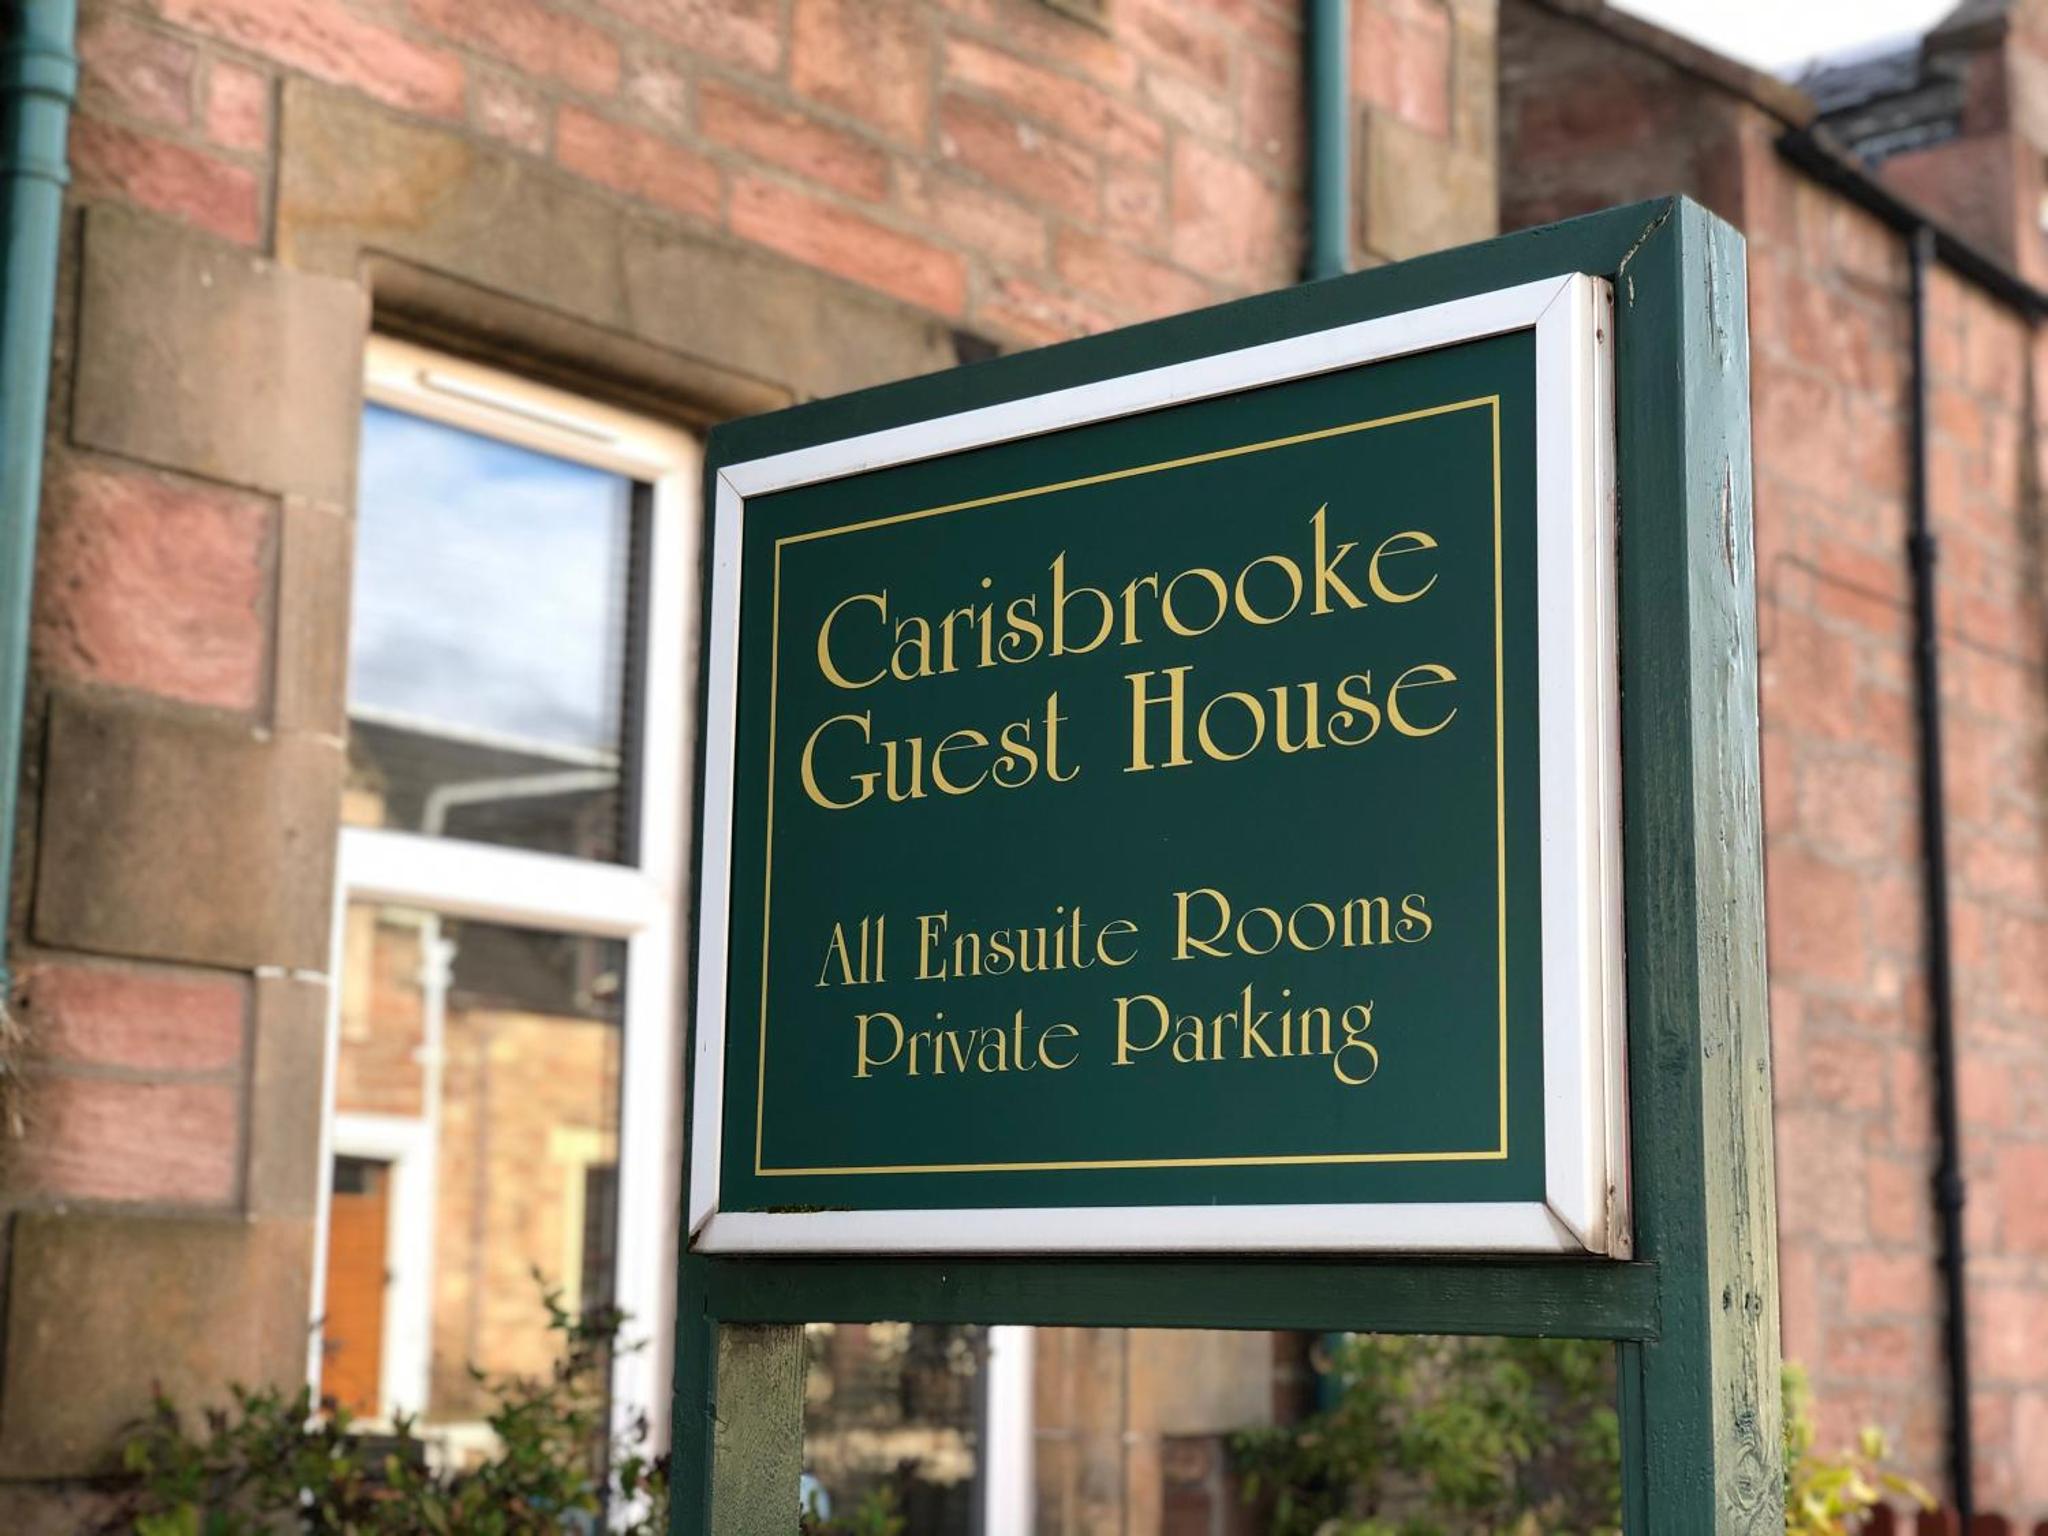 Carisbrooke Guest House